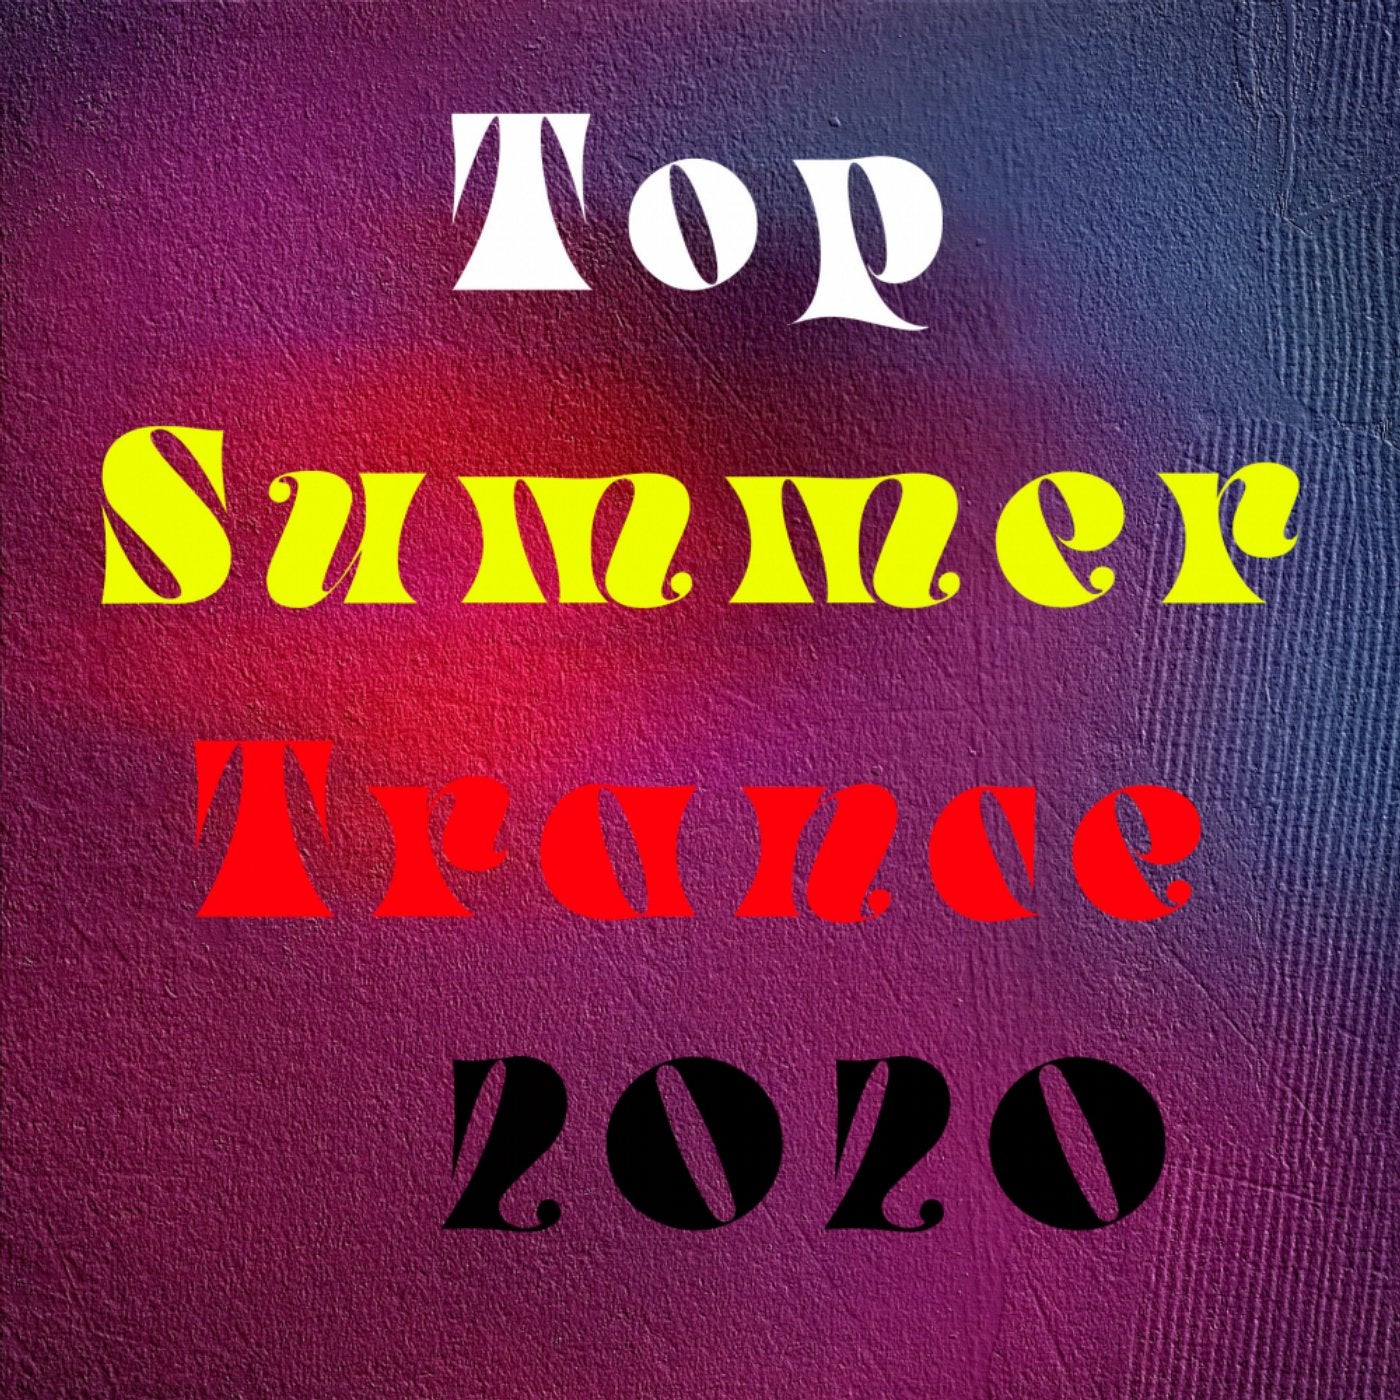 Top Summer Trance 2020